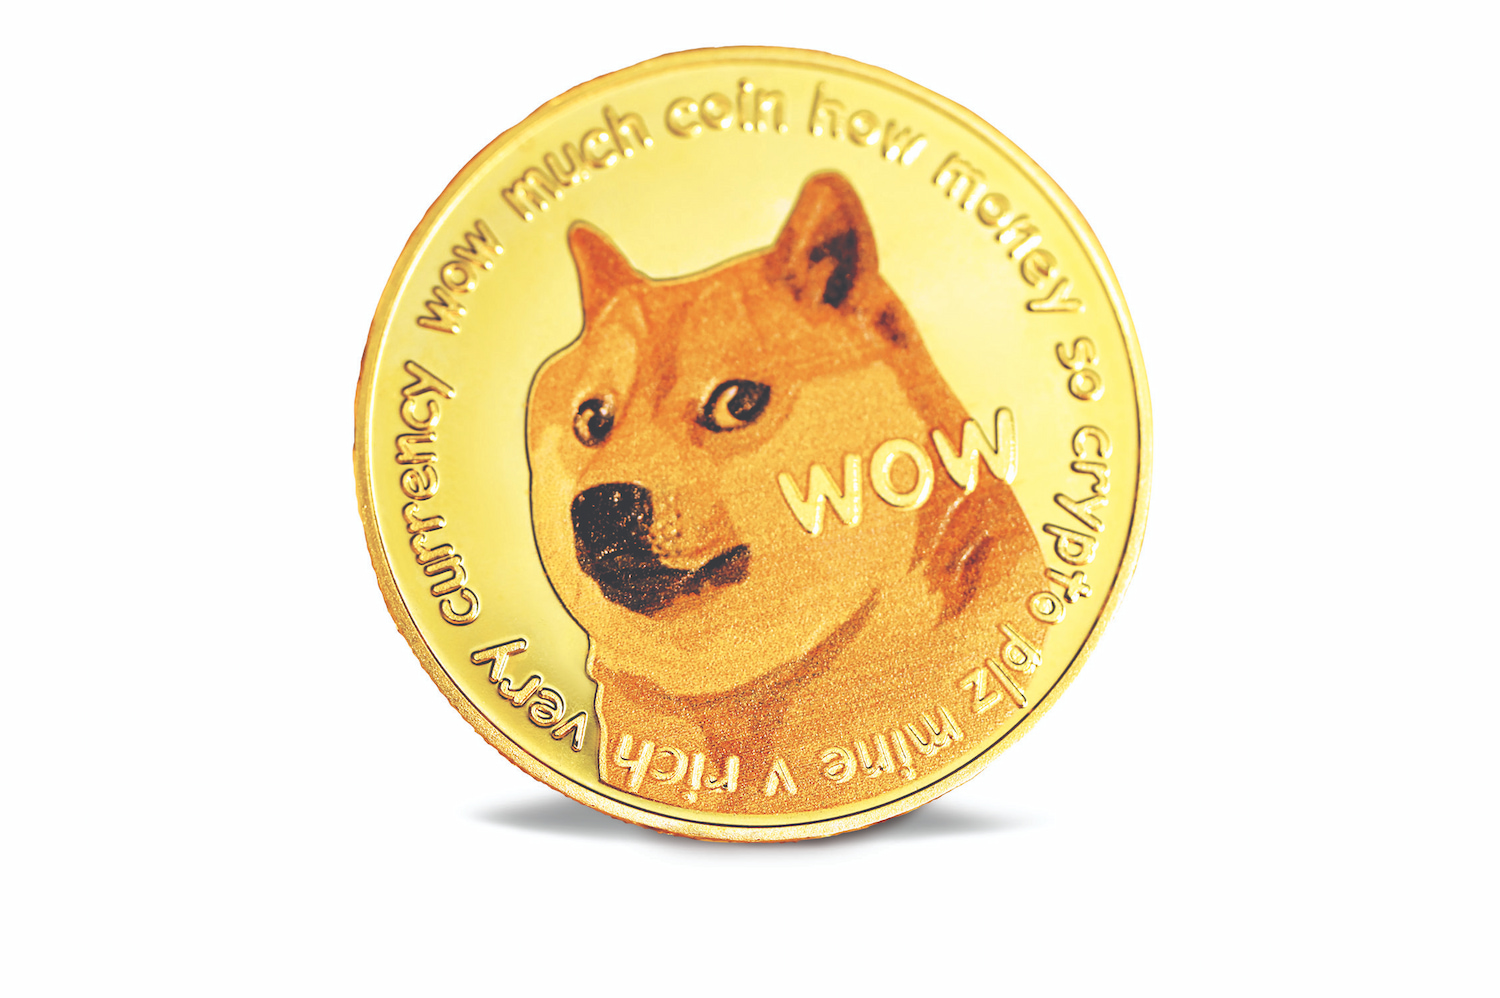 The Dogecoin logo